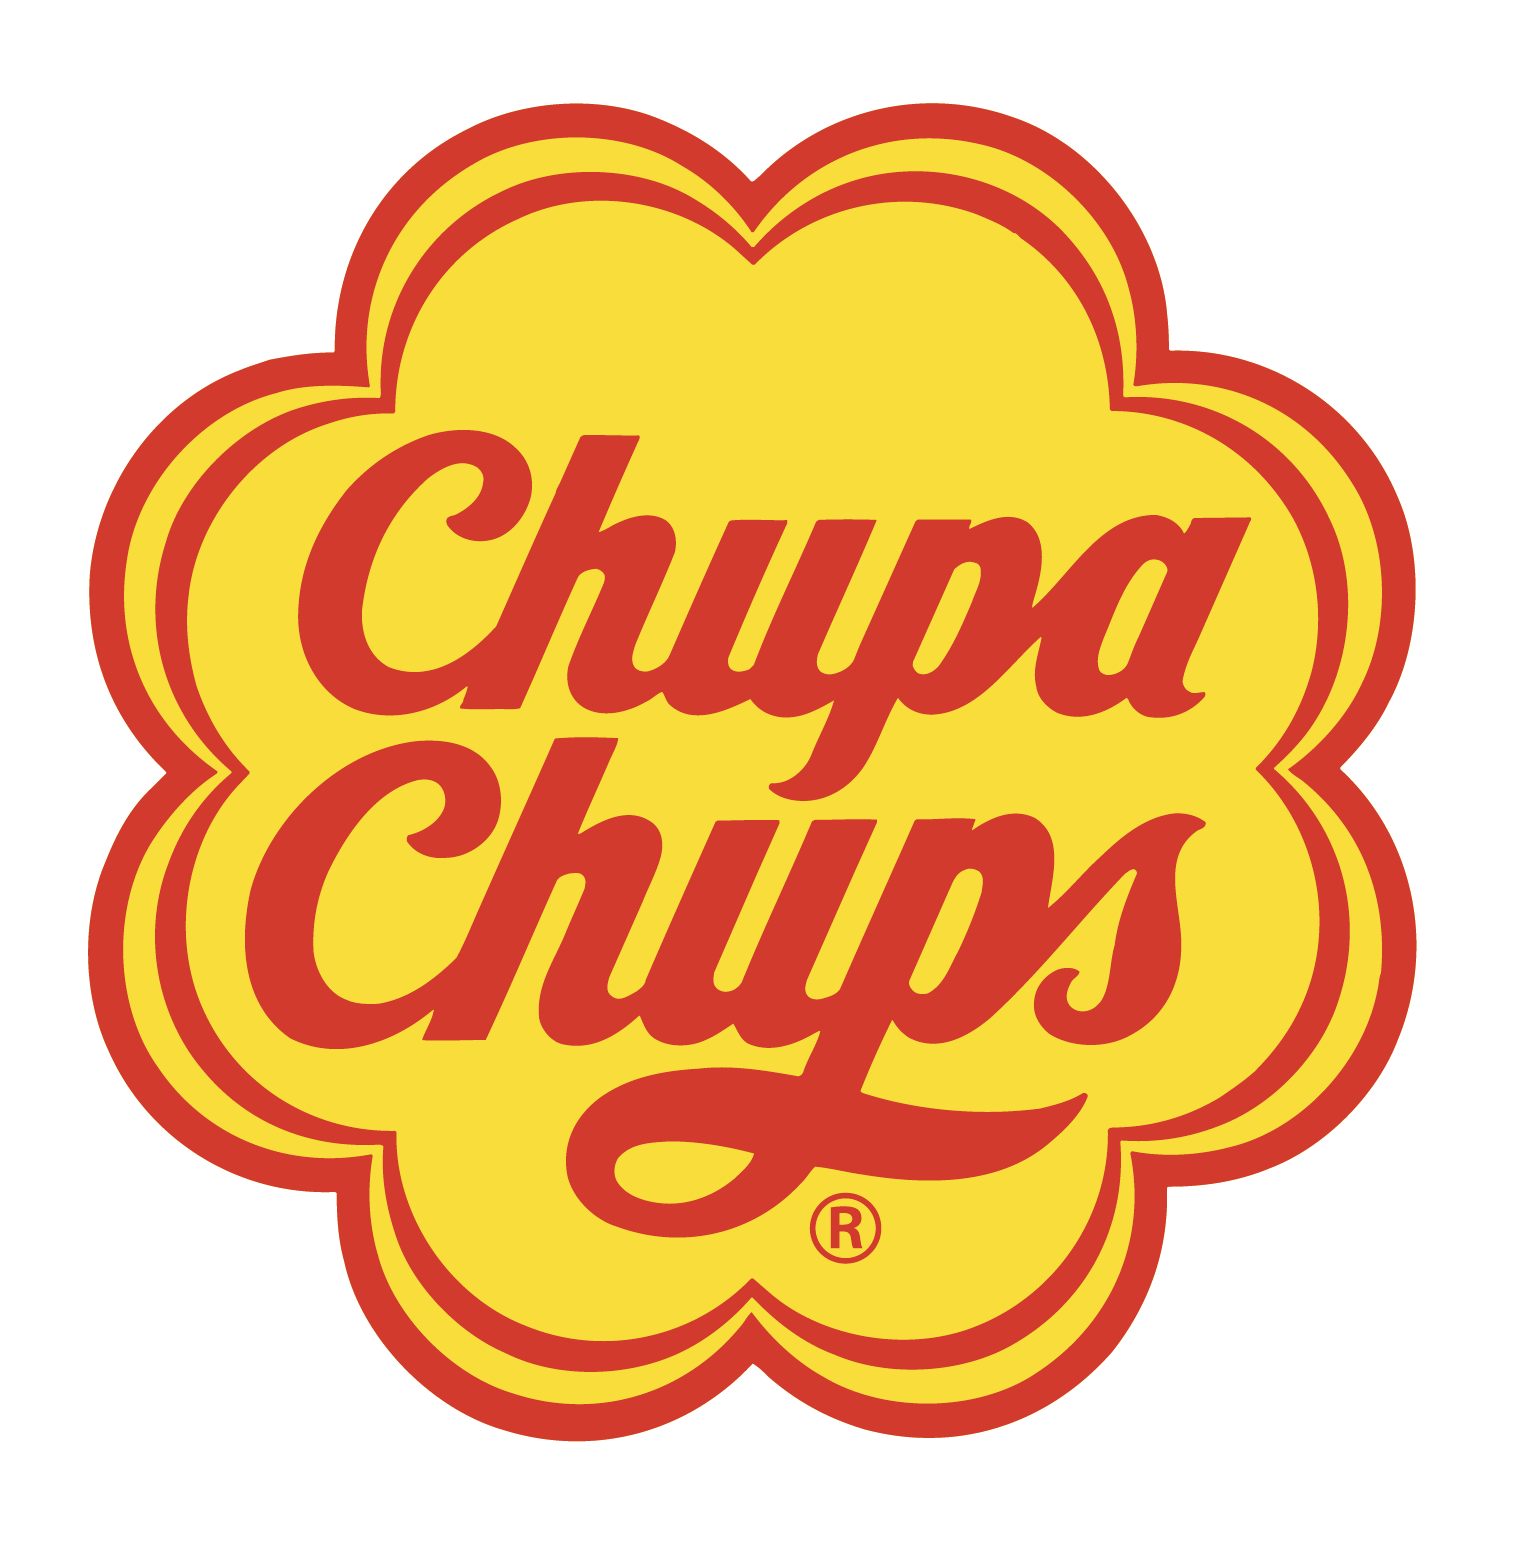 Imagen de Chupa Chups logo PNG imagen Transparente